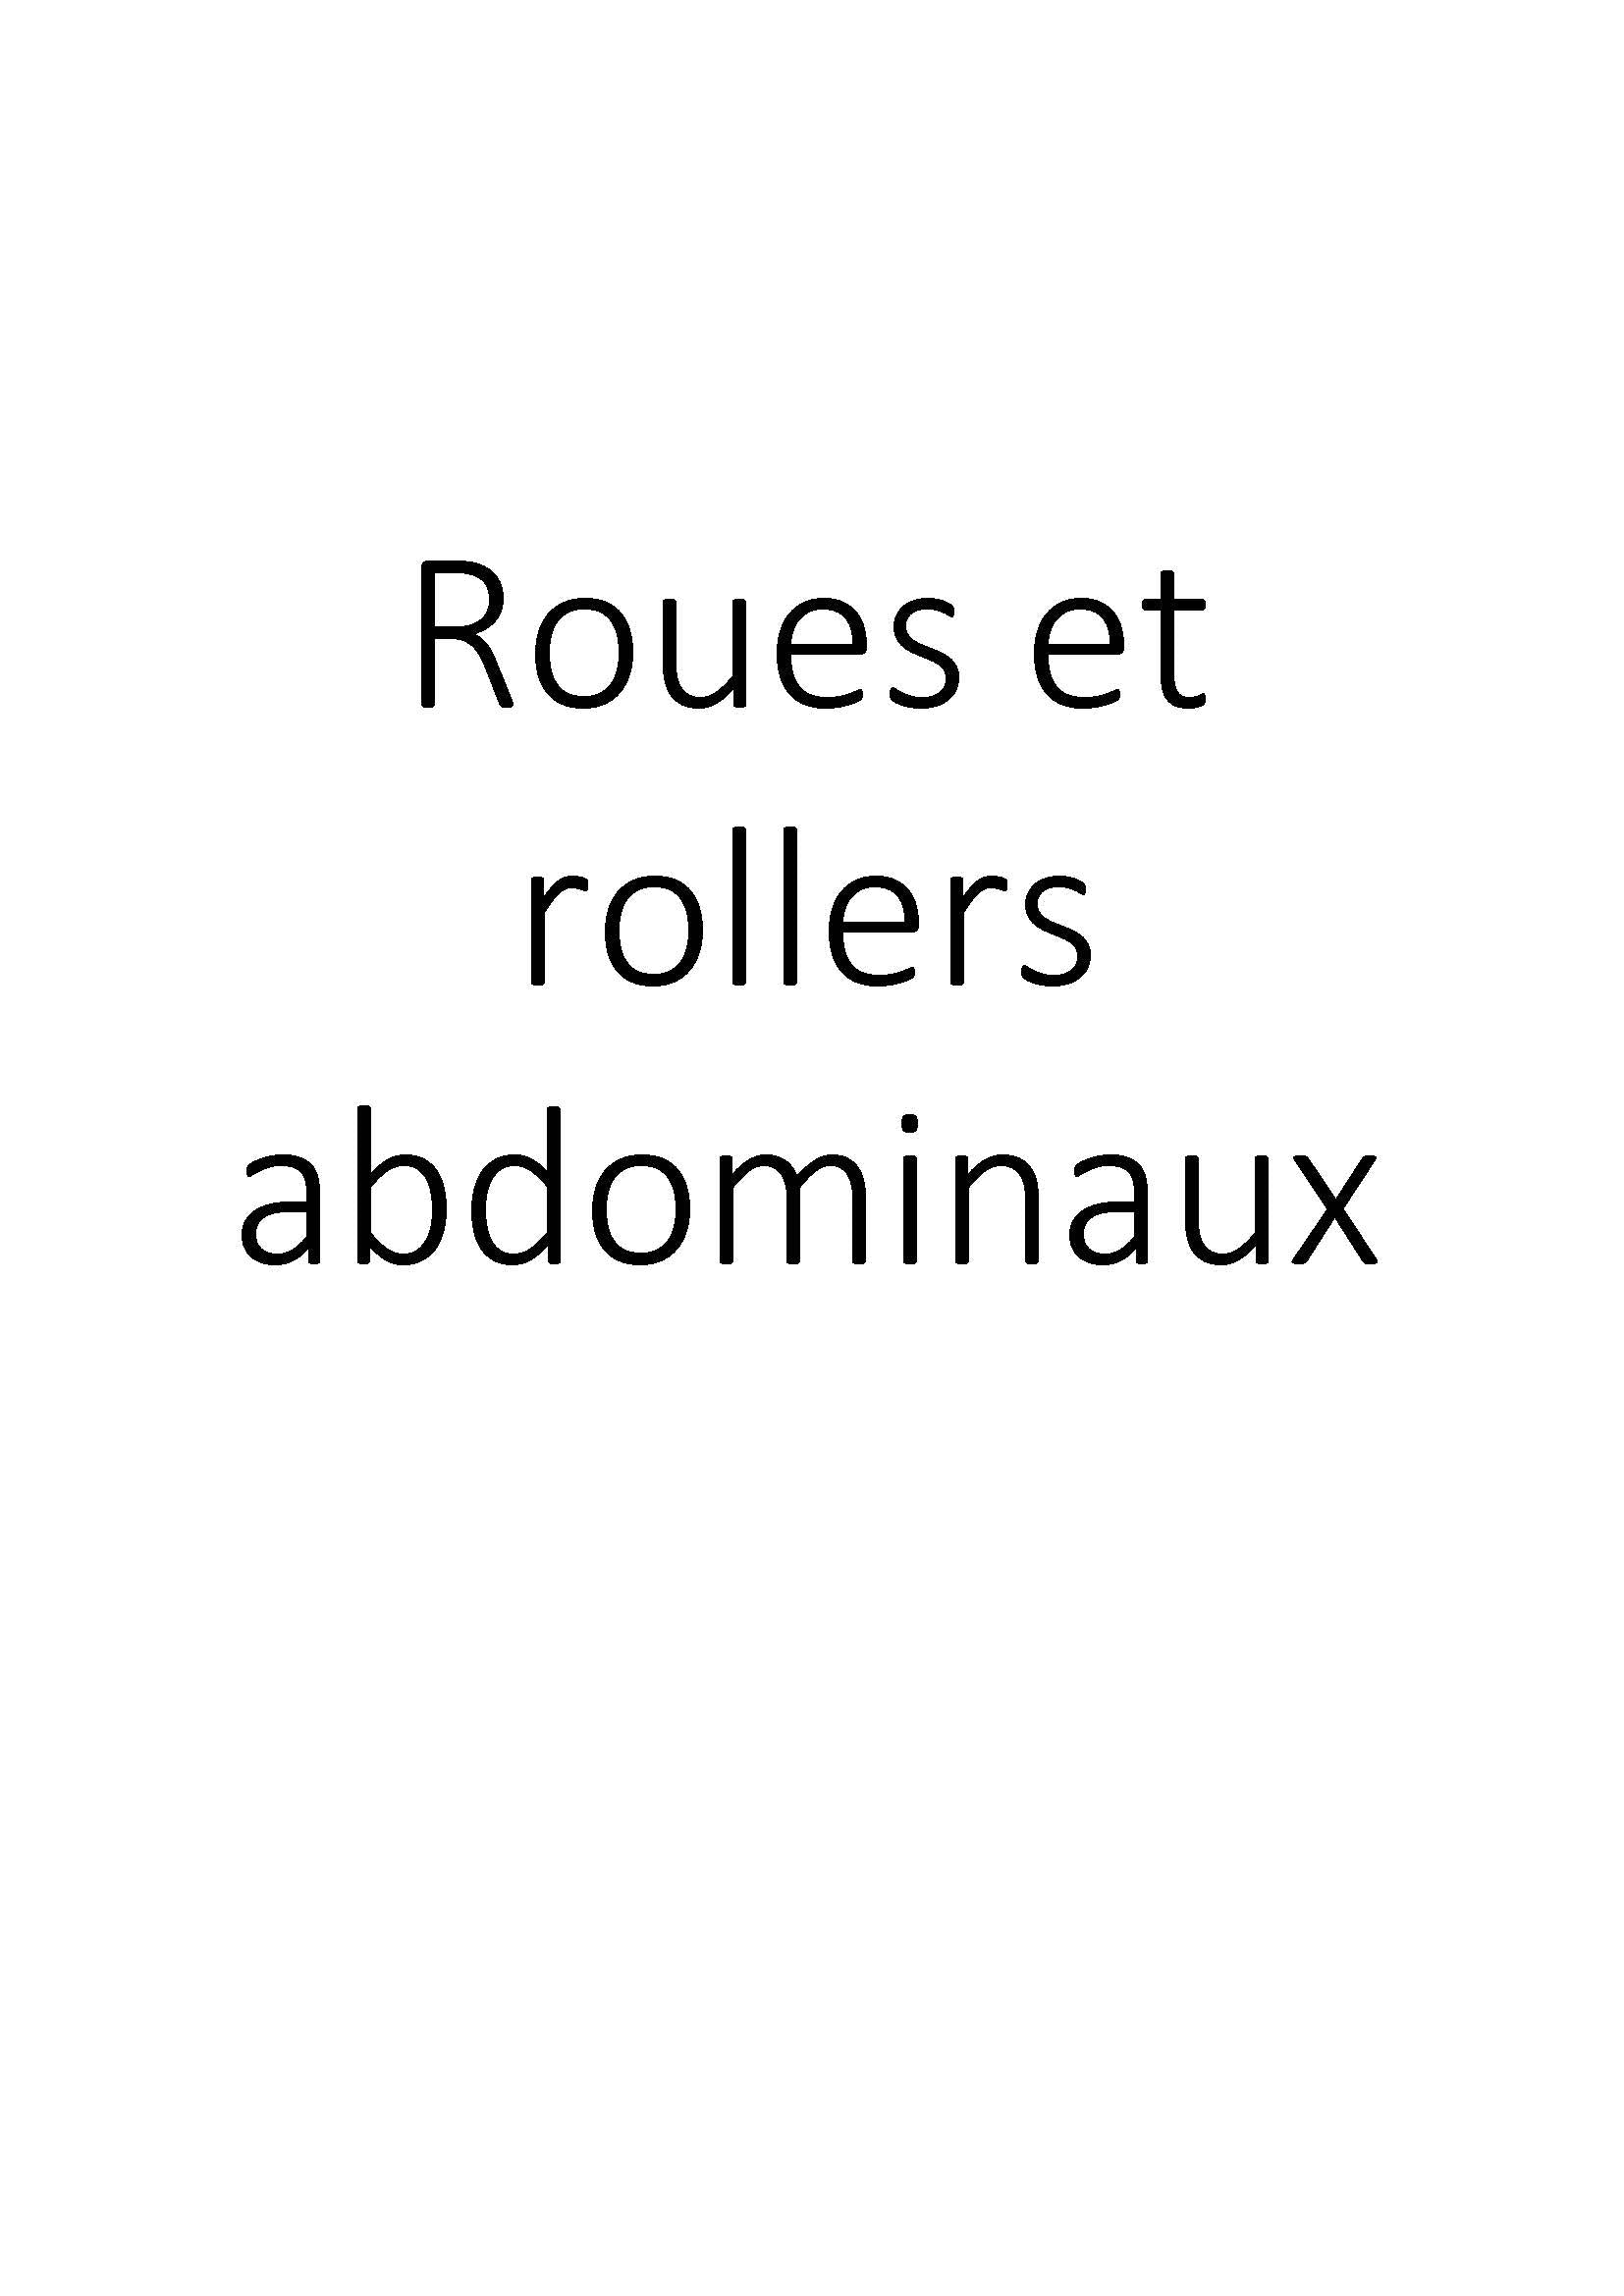 Roues et rollers abdominaux clicktofournisseur.com